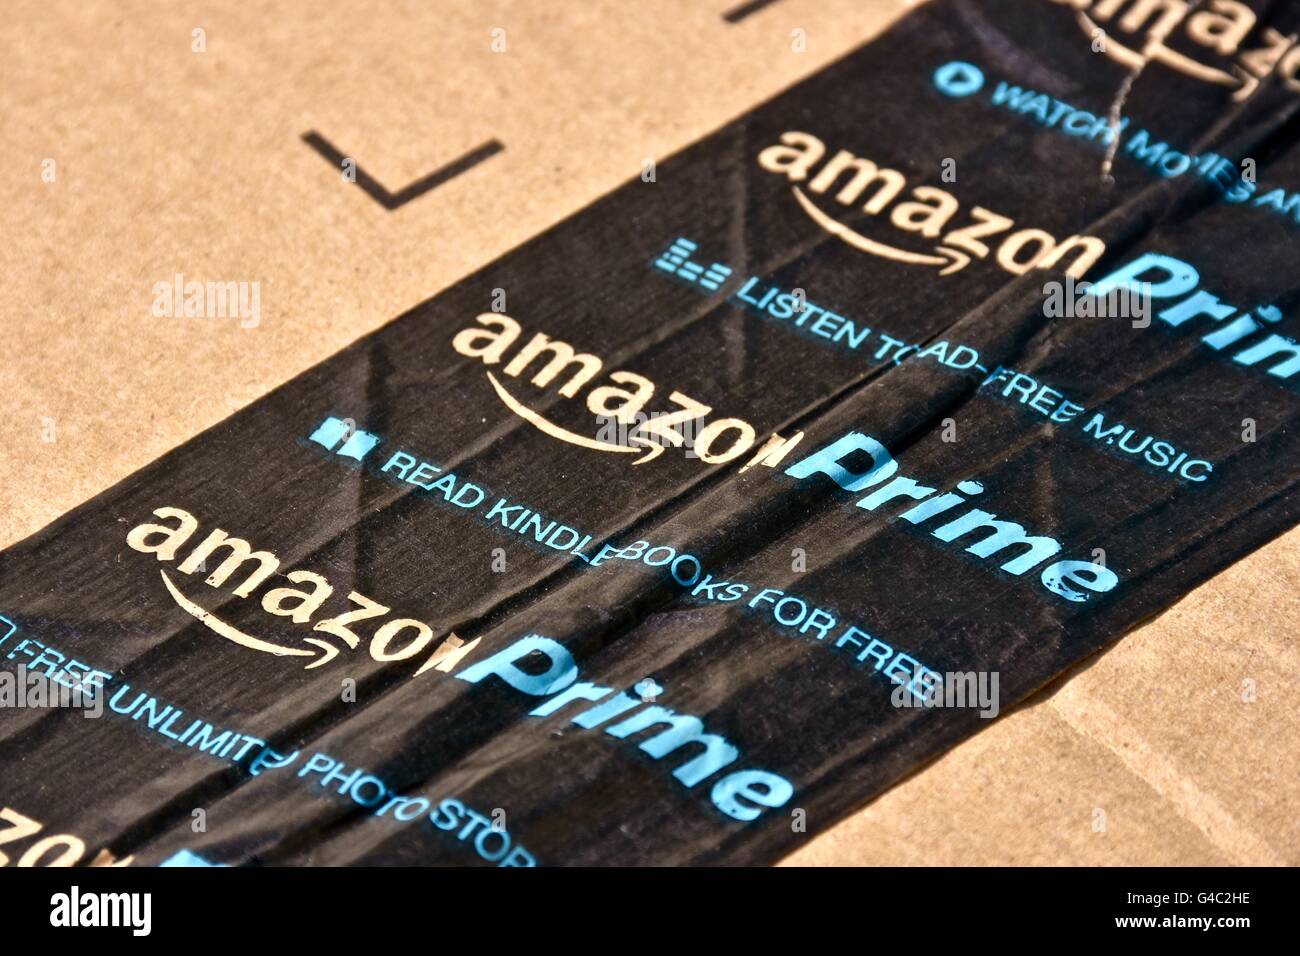 Eine Amazon Prime-Box mit Amazonen Signatur Klebeband Stockfotografie -  Alamy